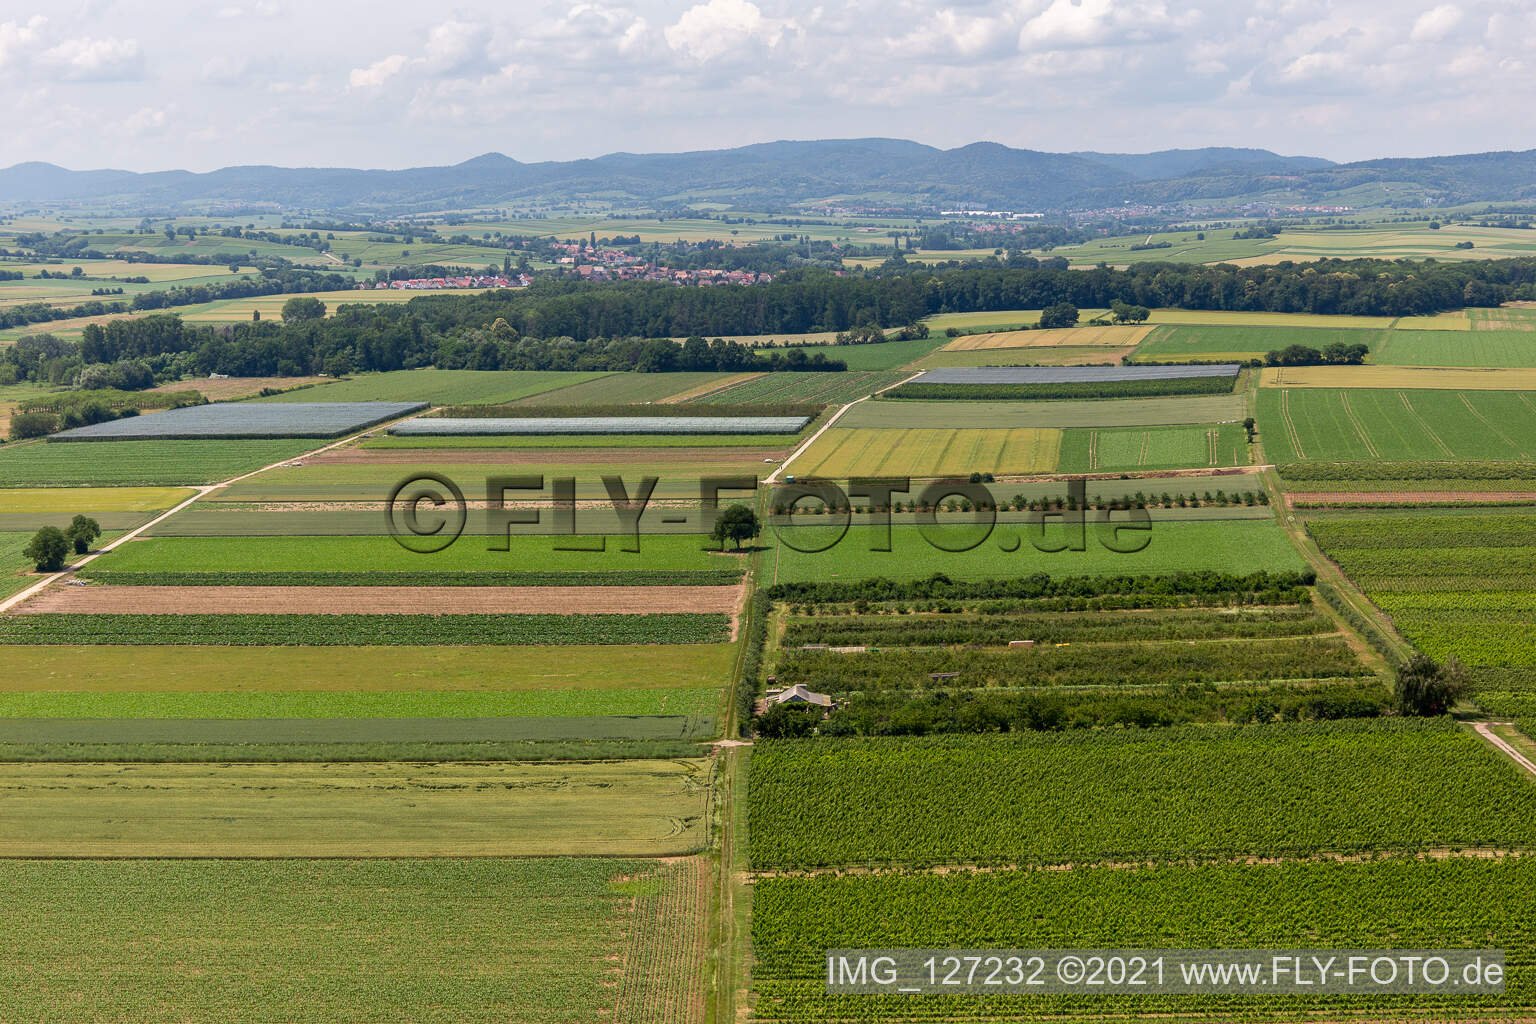 Aerial view of Eier-Meier orchard in the district Mühlhofen in Billigheim-Ingenheim in the state Rhineland-Palatinate, Germany